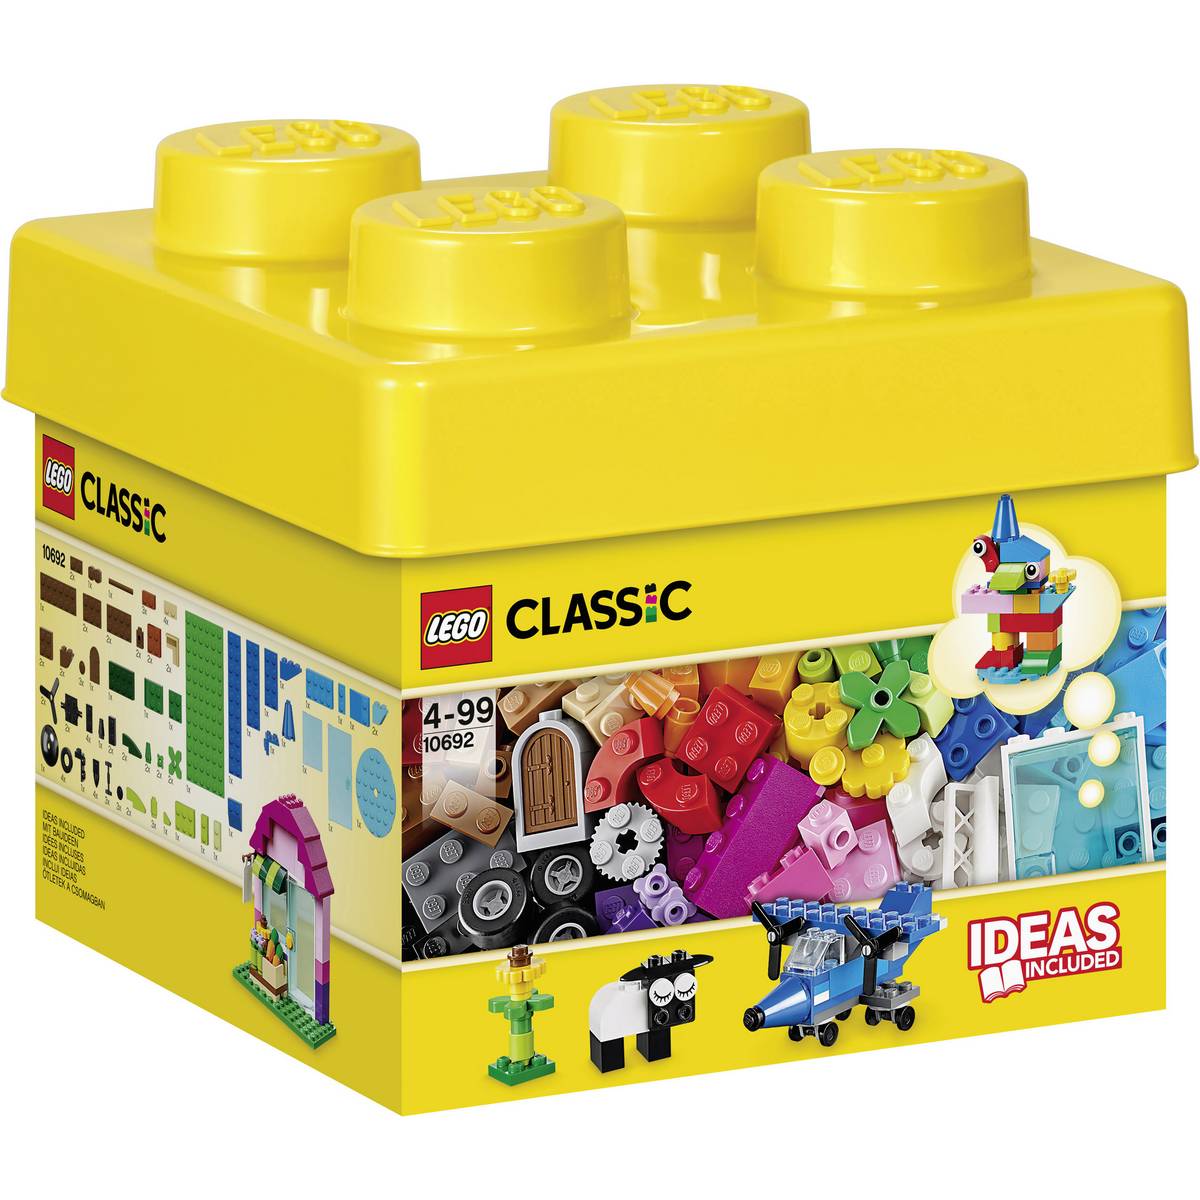 Bausteine-Box klein Lego Classic, 221 Teile, ab 4 Jahren